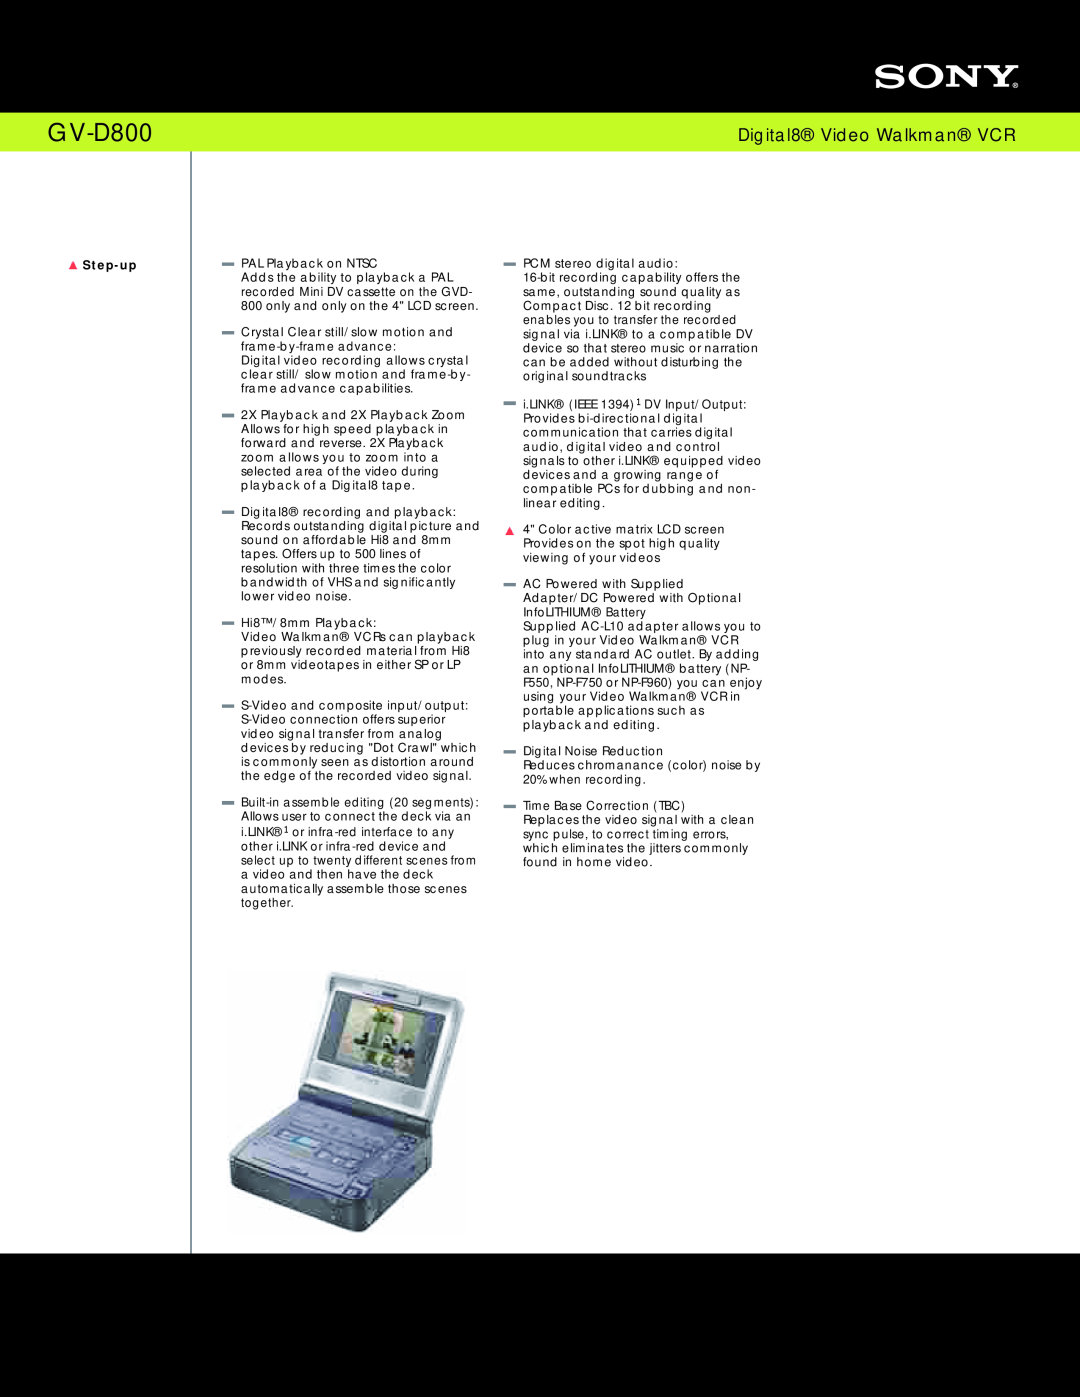 Sony DIGITAL8 manual GV-D800, Digital8 Video Walkman VCR, Step-up 